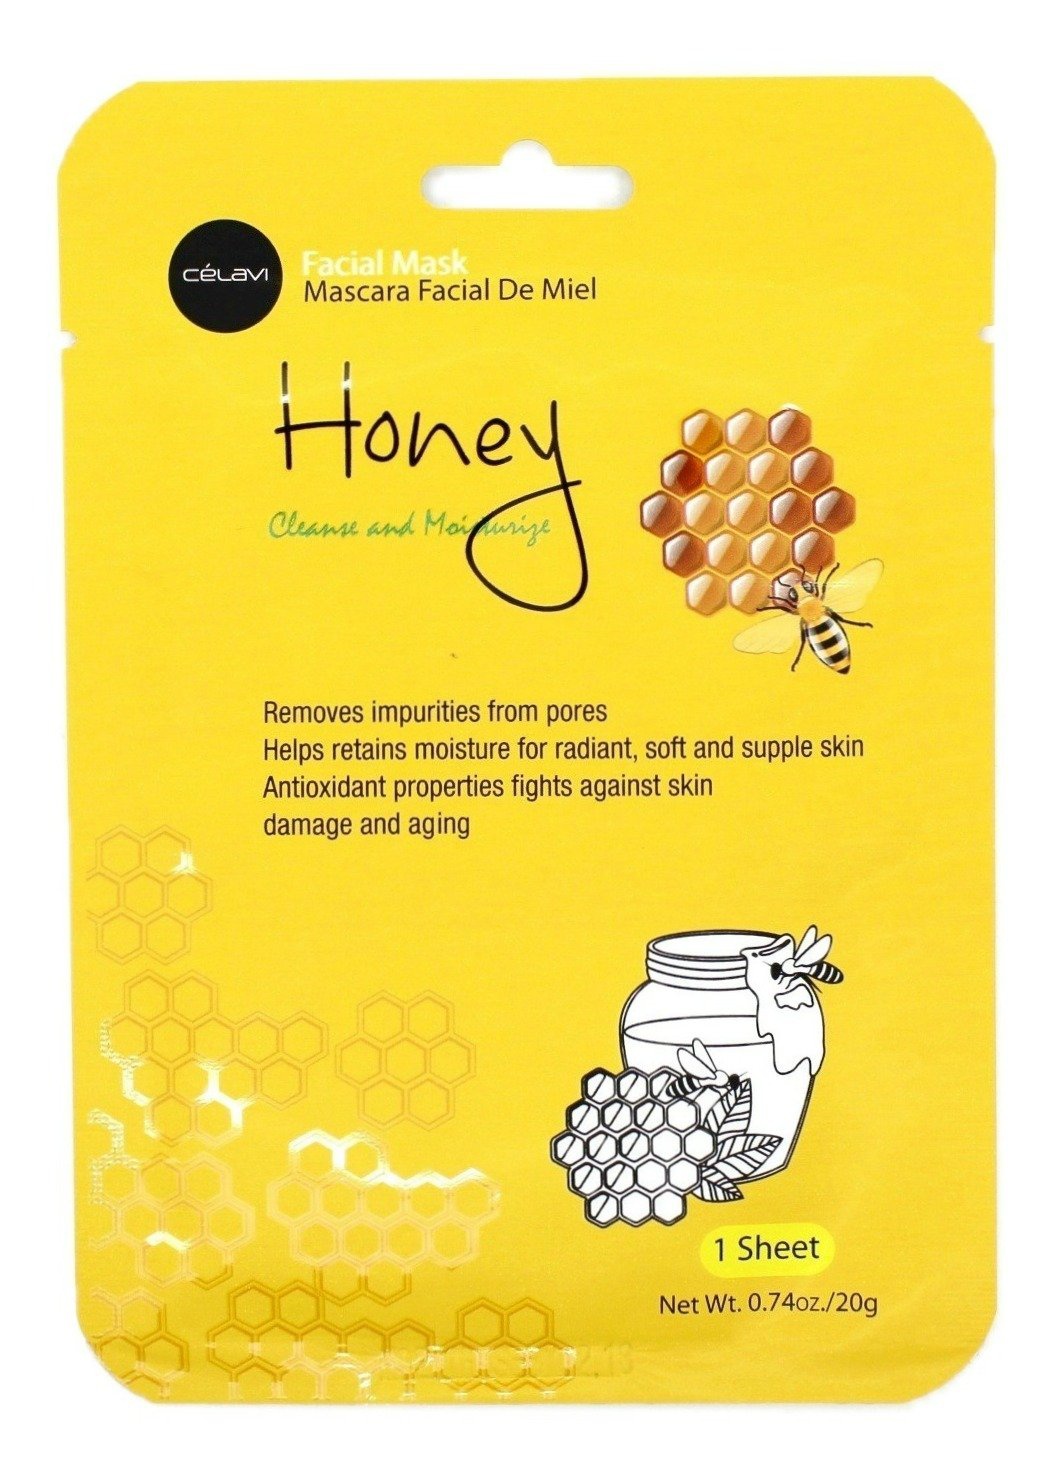 Celavi Honey Cleanse And Moisturize